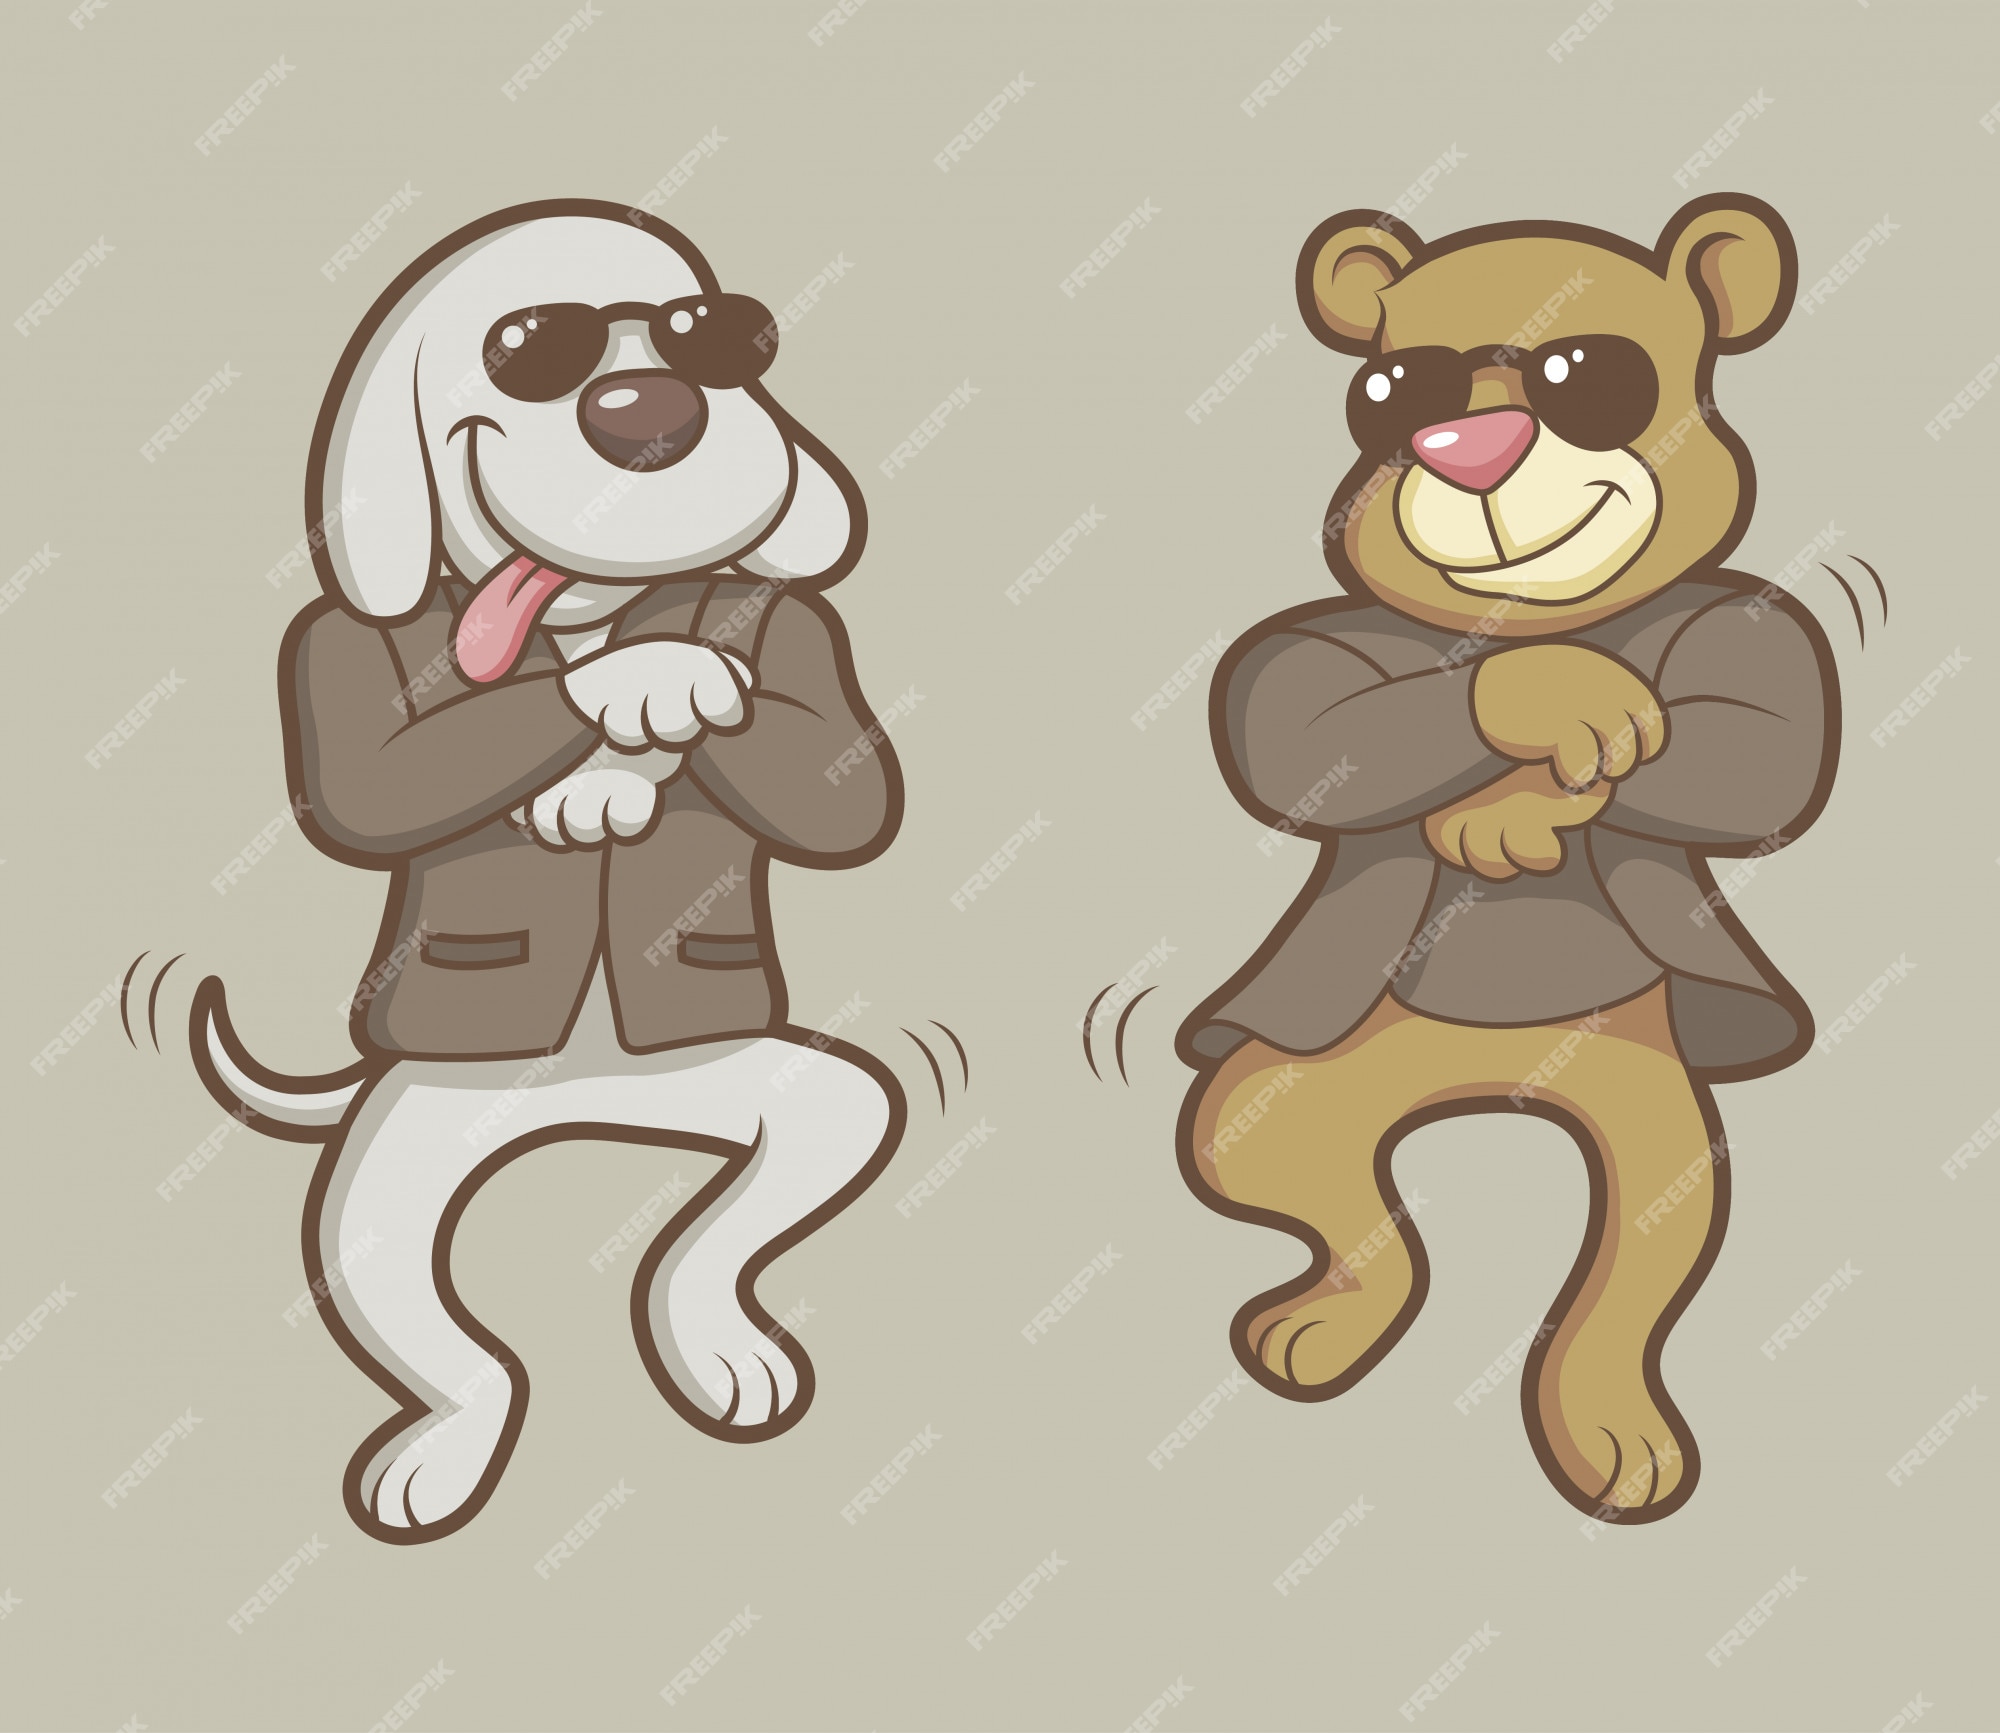 Premium Vector | Dancing dog and bear cartoon character